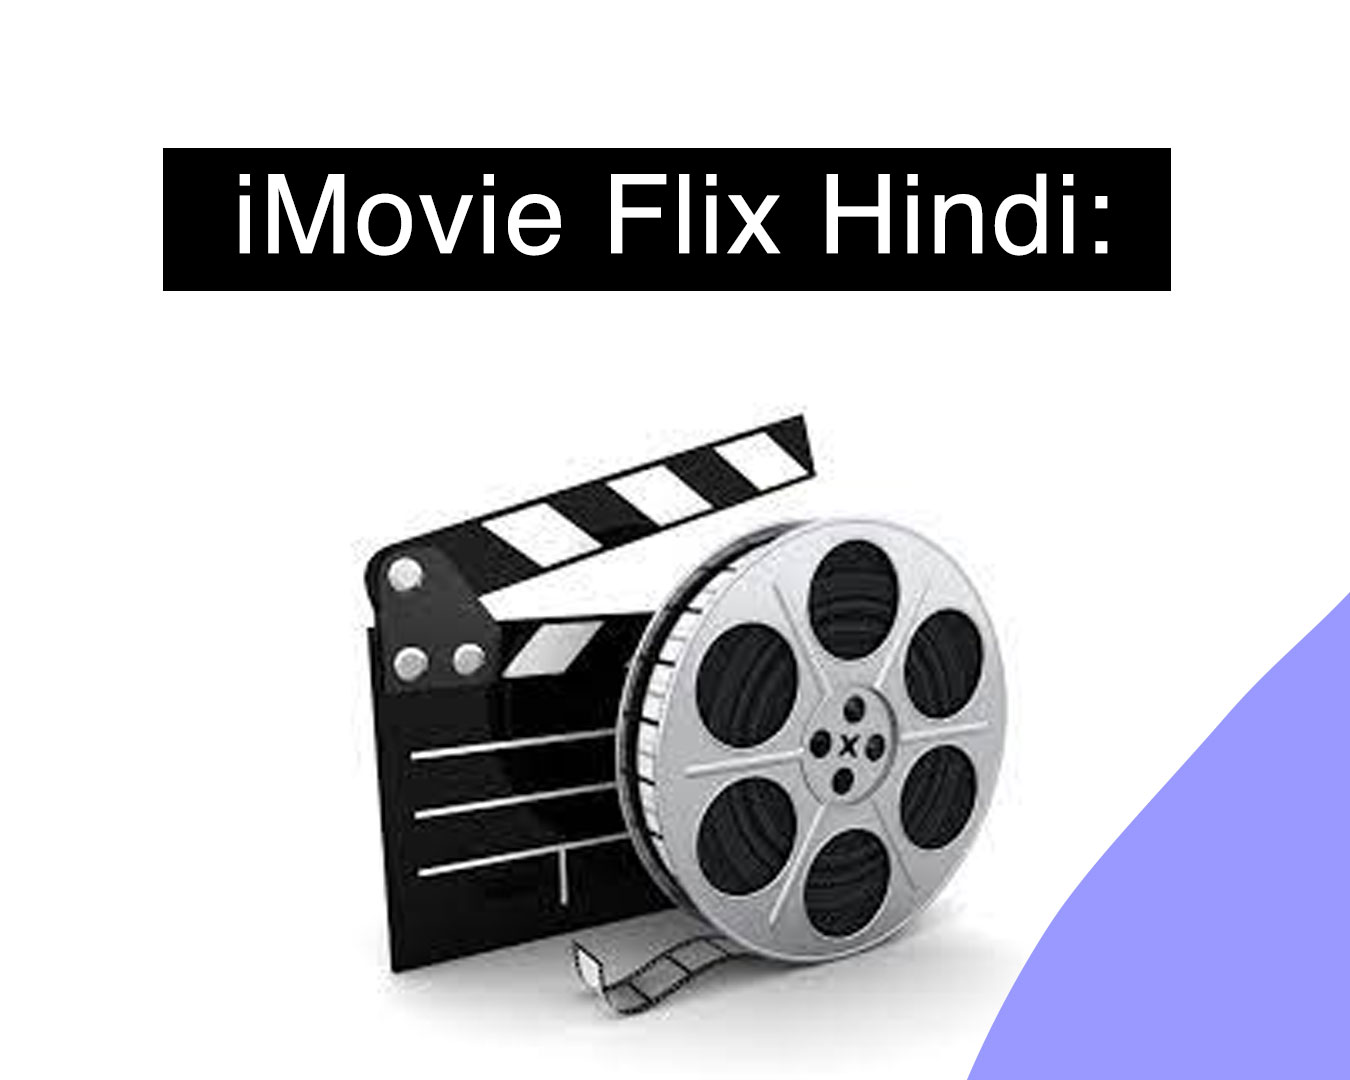 iMovie-Flix-Hindi